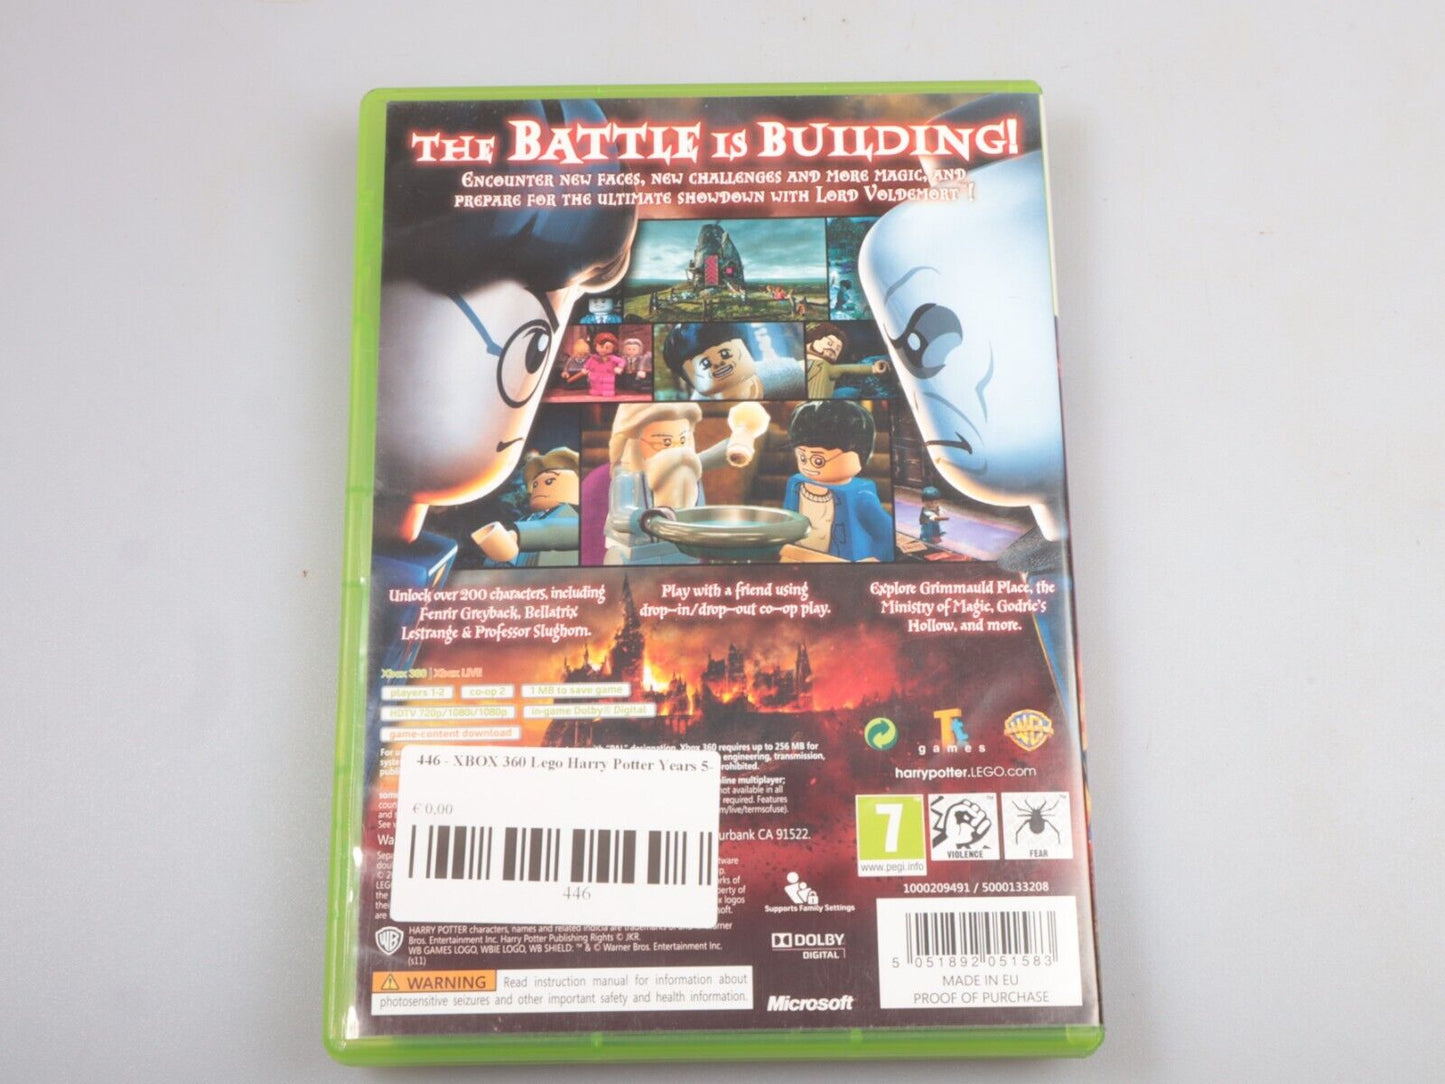 Xbox360 | Lego Harry Potter Jaren 5-7 